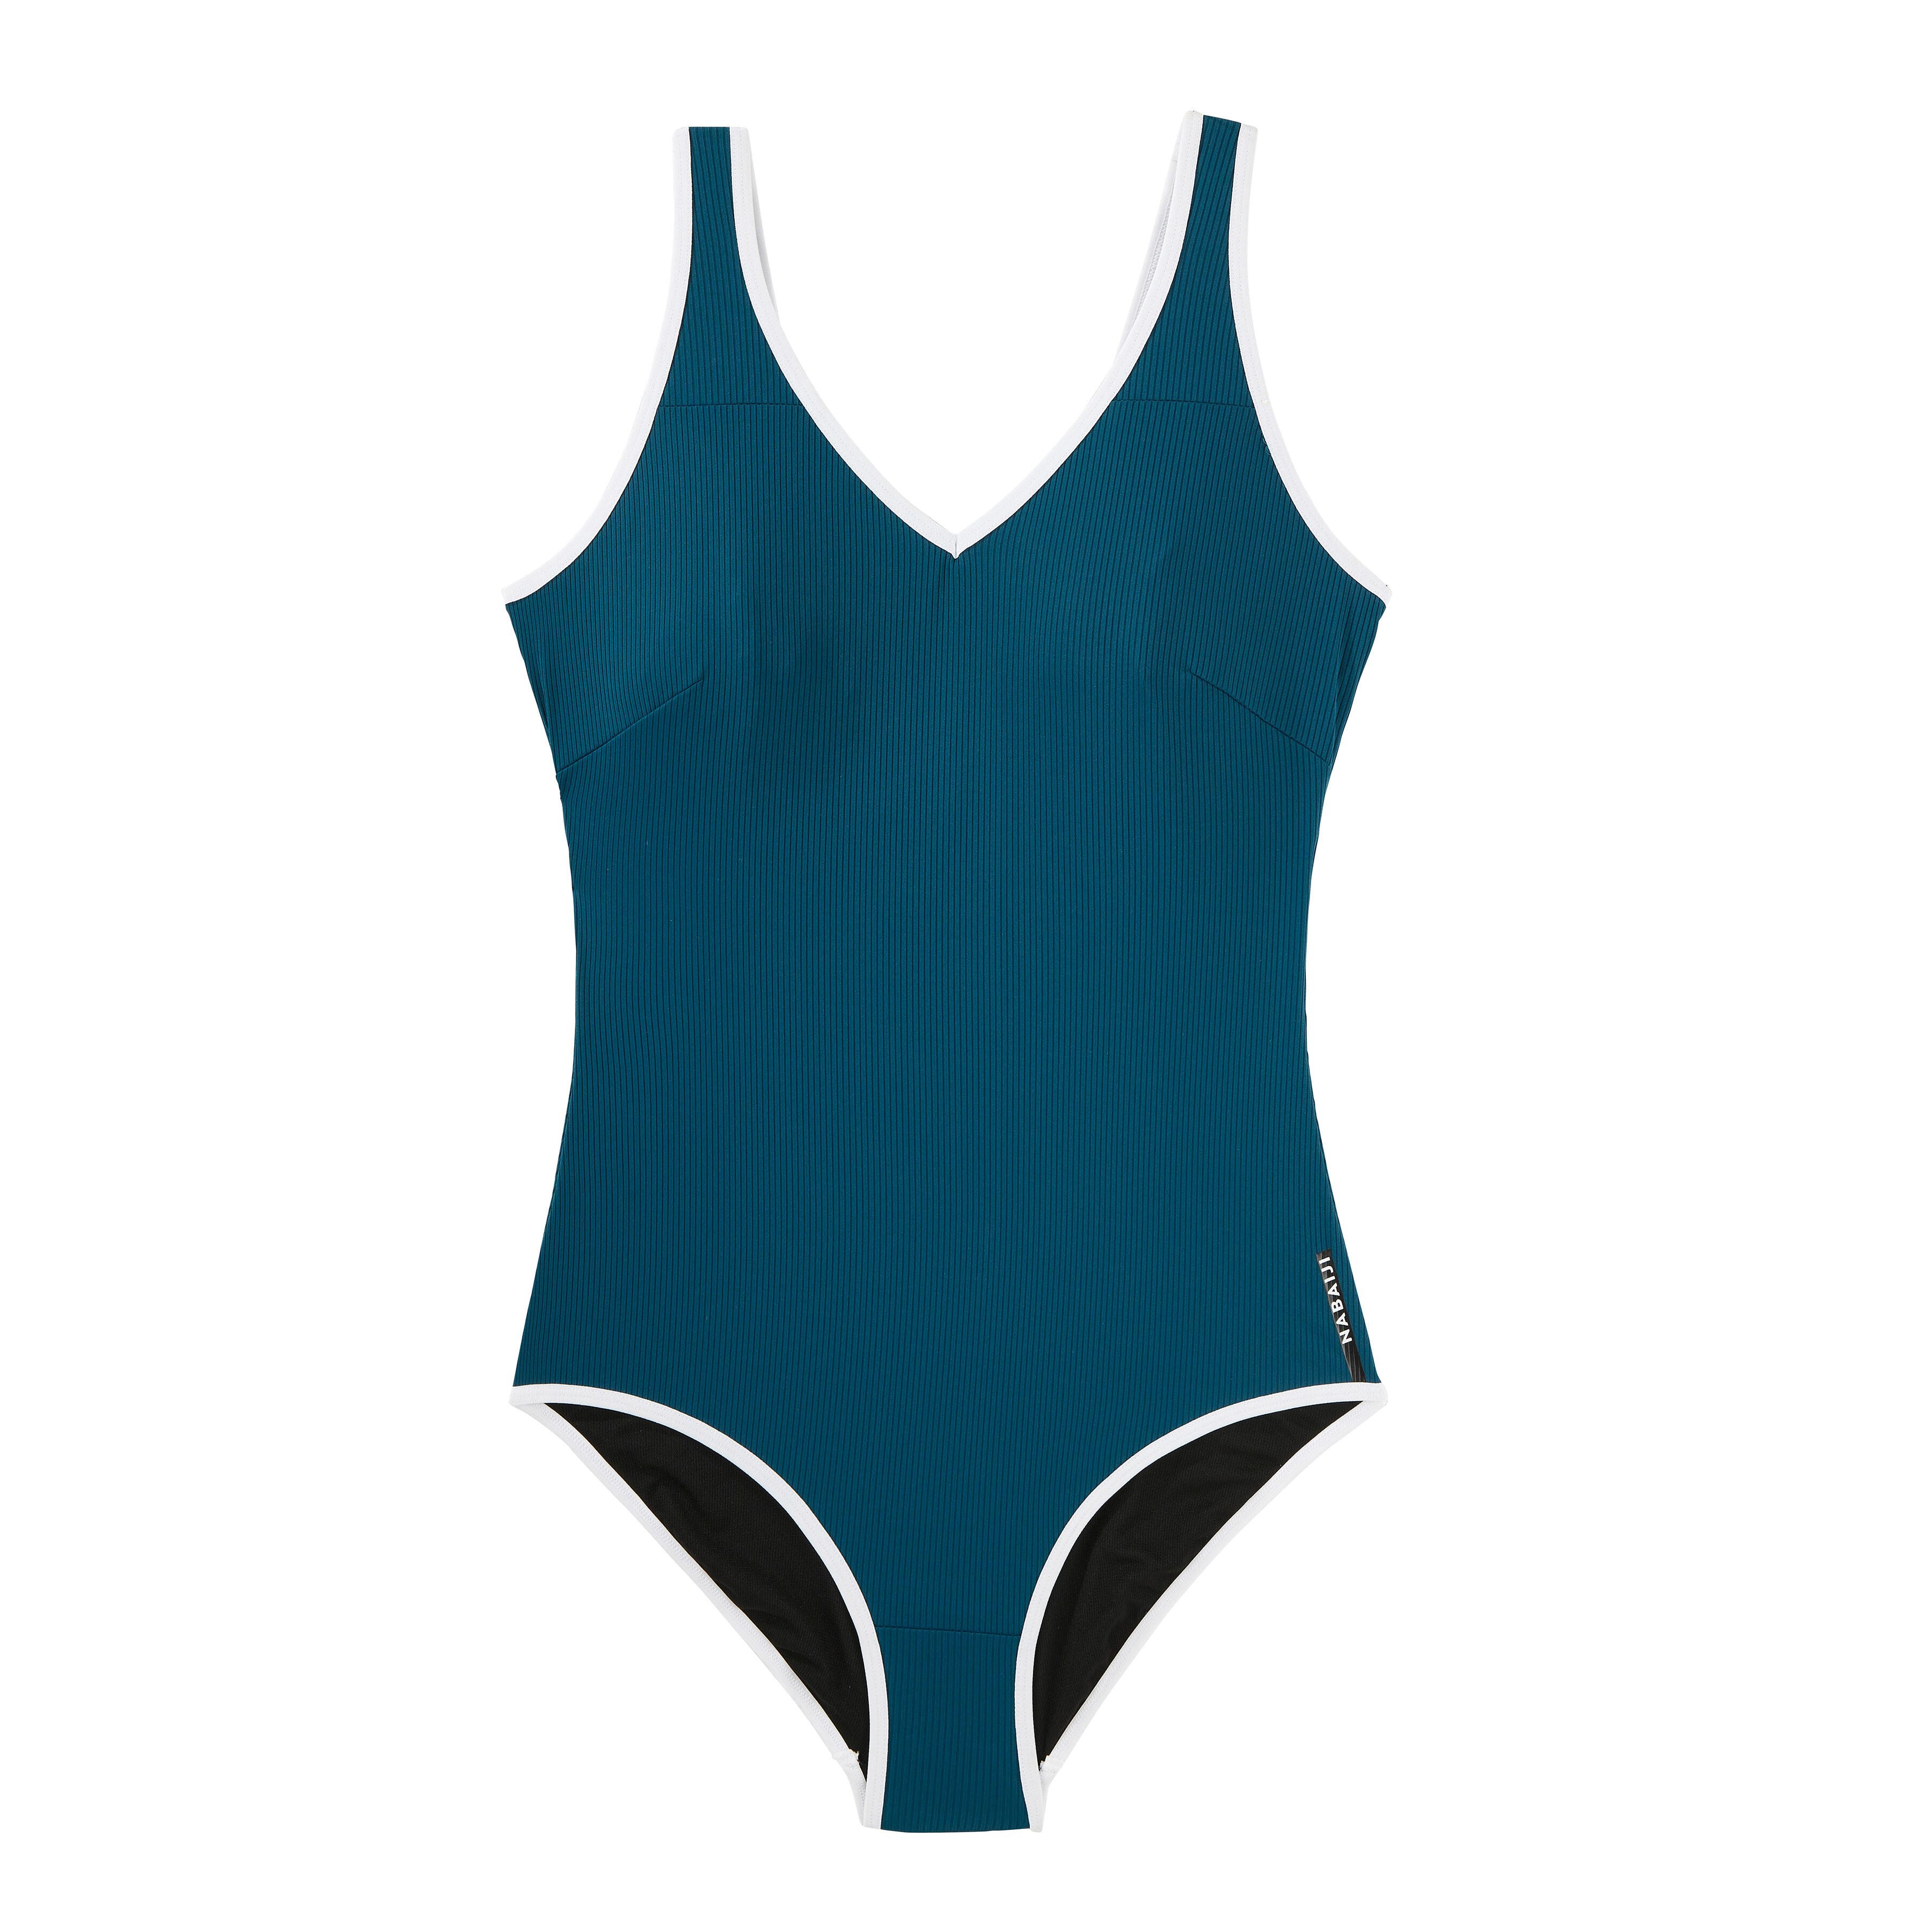 Women's 1-piece Swimsuit - Kamiye Fili Petrol - Dark petrol blue - Nabaiji  - Decathlon